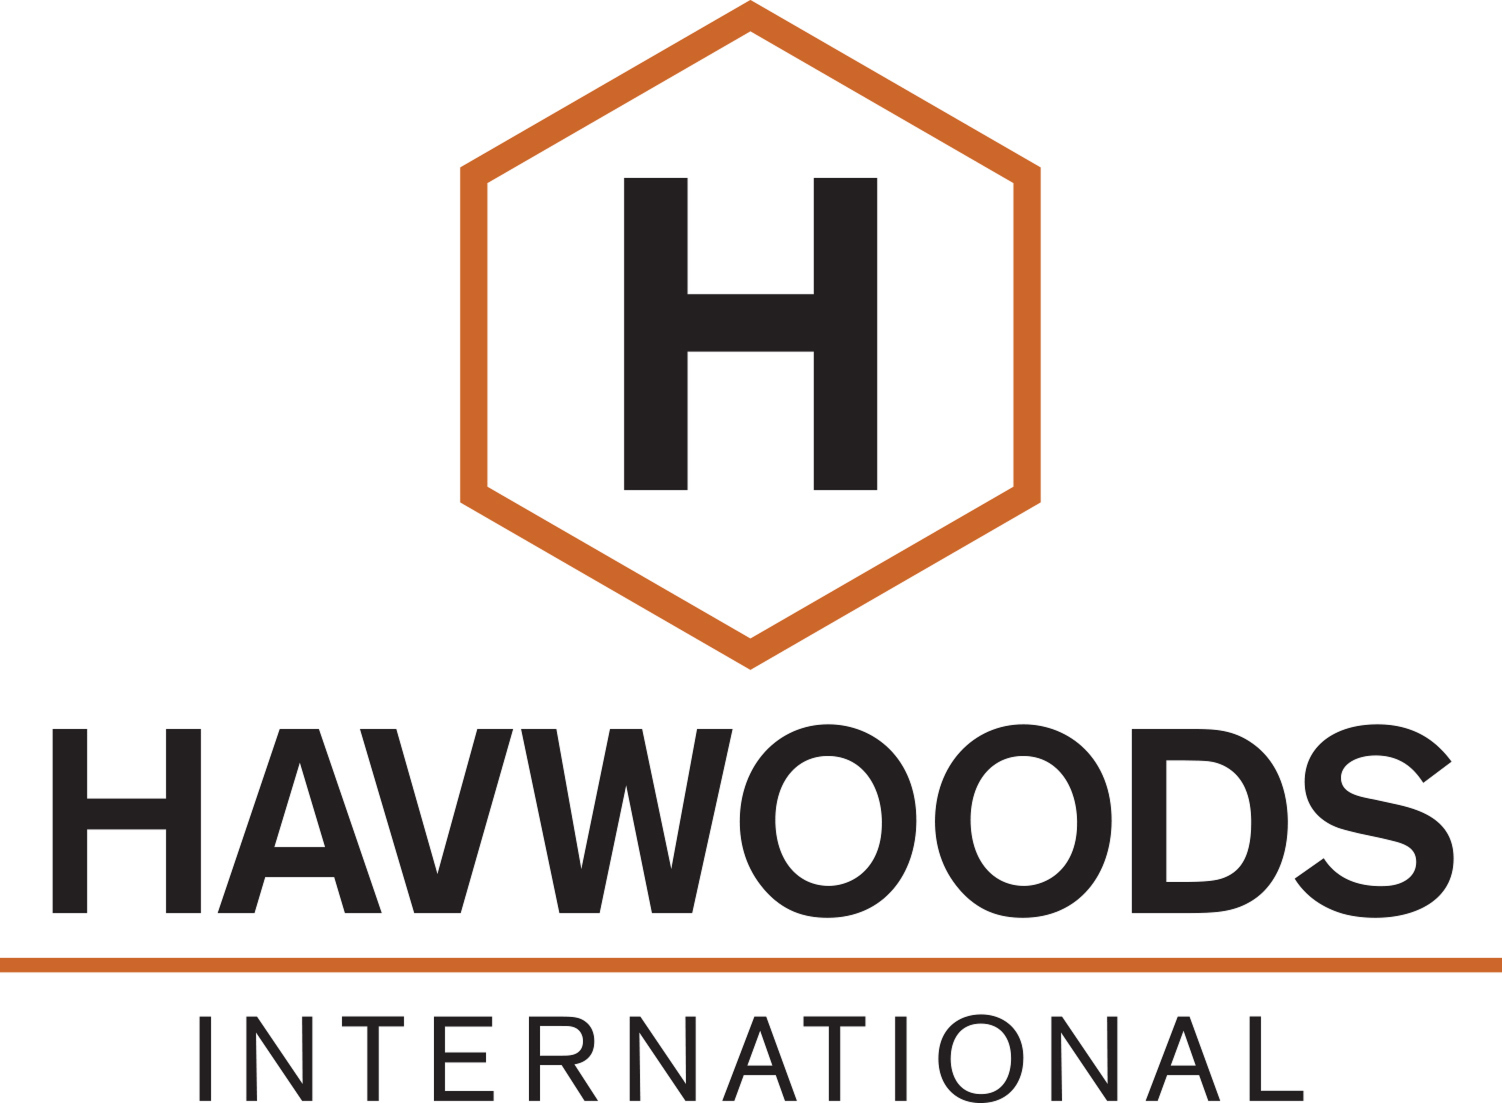 https://www.mercurycfl.co.uk/wp-content/uploads/2020/05/72dpi-Havwoods-Logo-Portrait.png